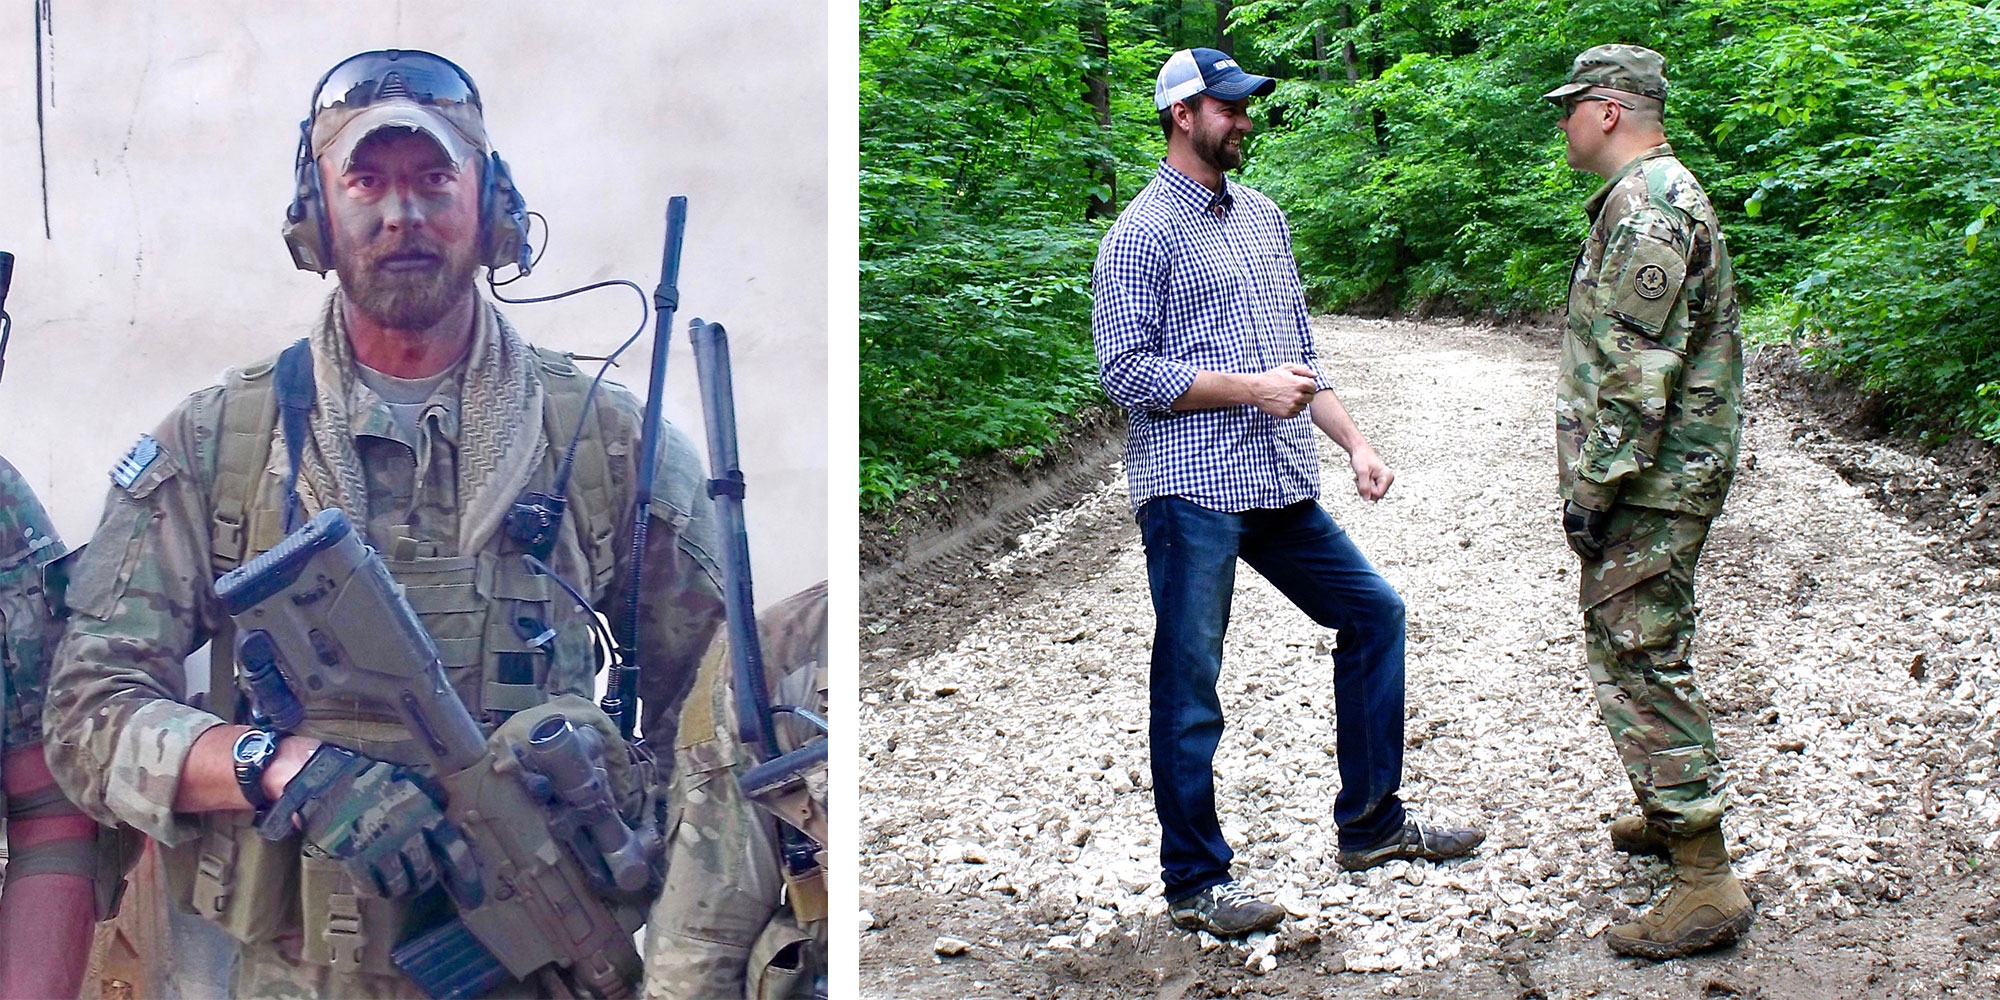 Green Beret vet finds purpose through Spirit of America